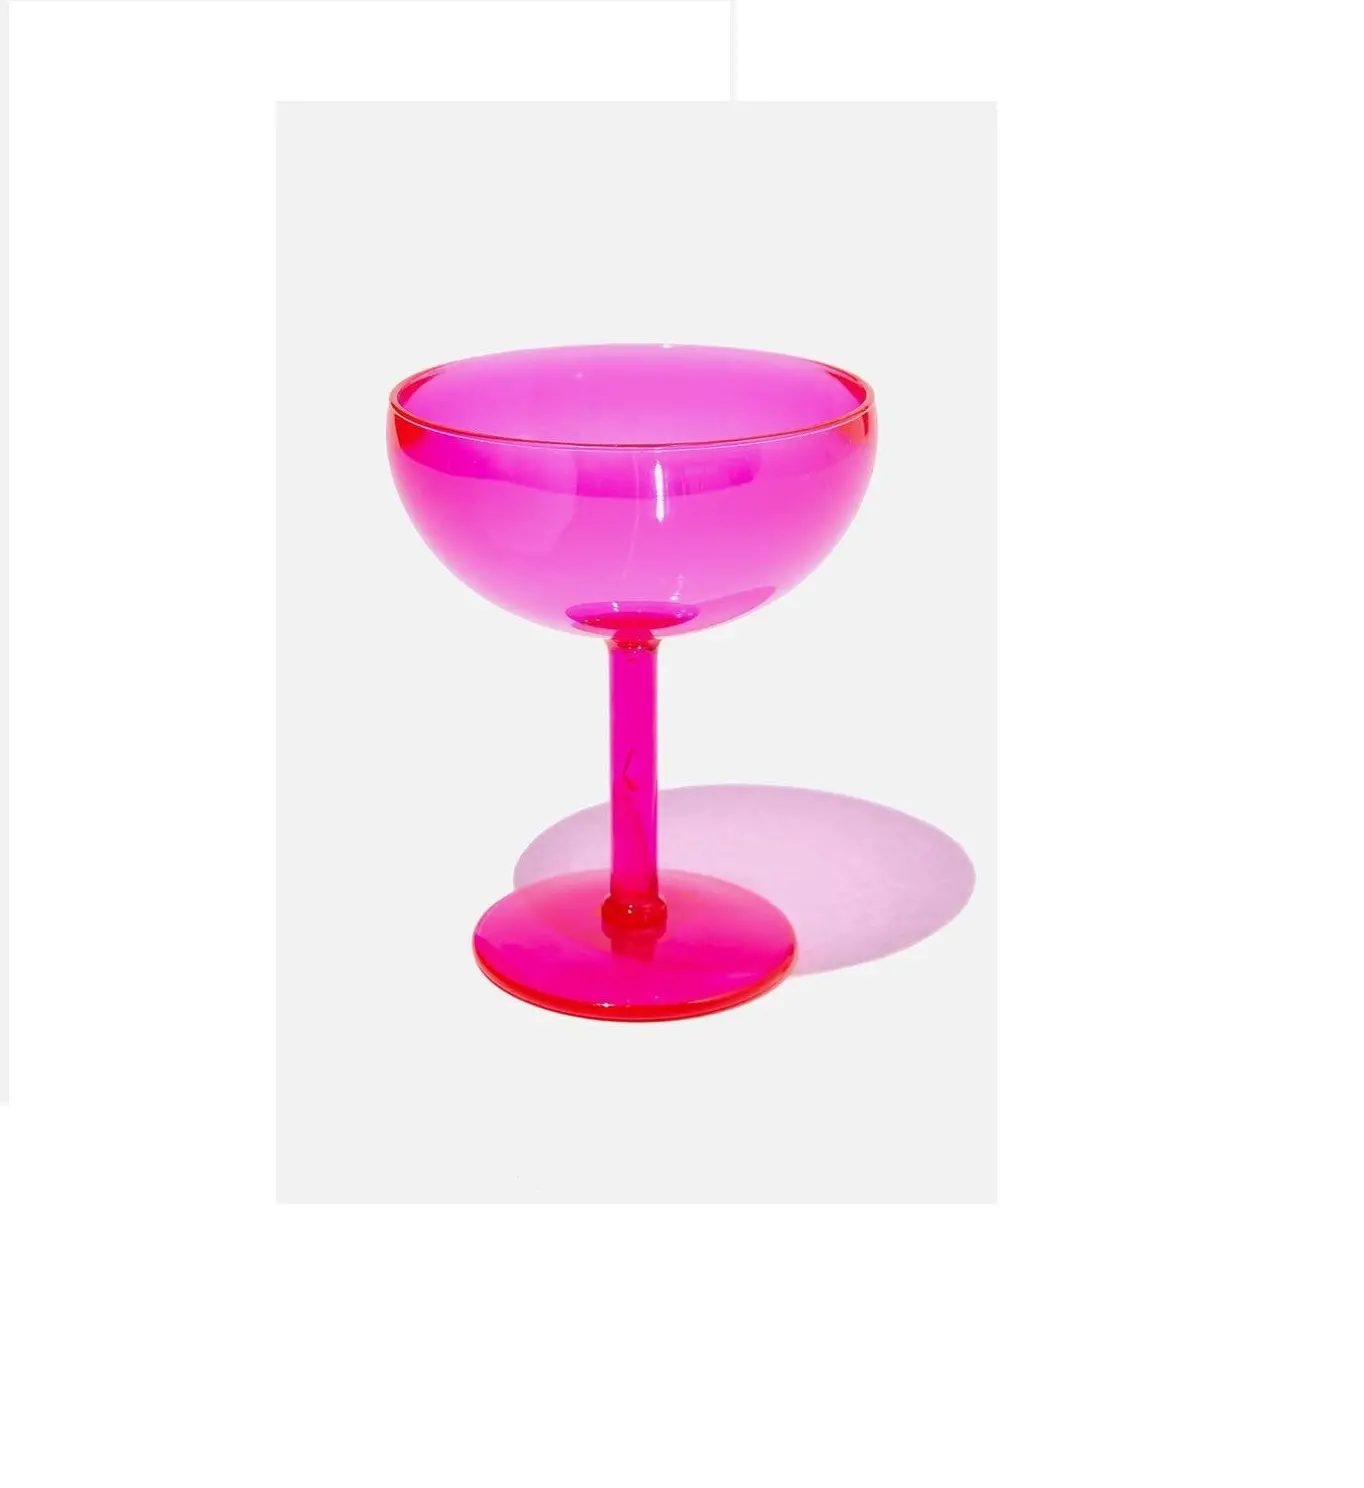 GOOD Selling Flower Glass Vases Design Fashion KITCHEN Printed Vase Transparent Round Shape Home Decor Meena Glass Oval Vase